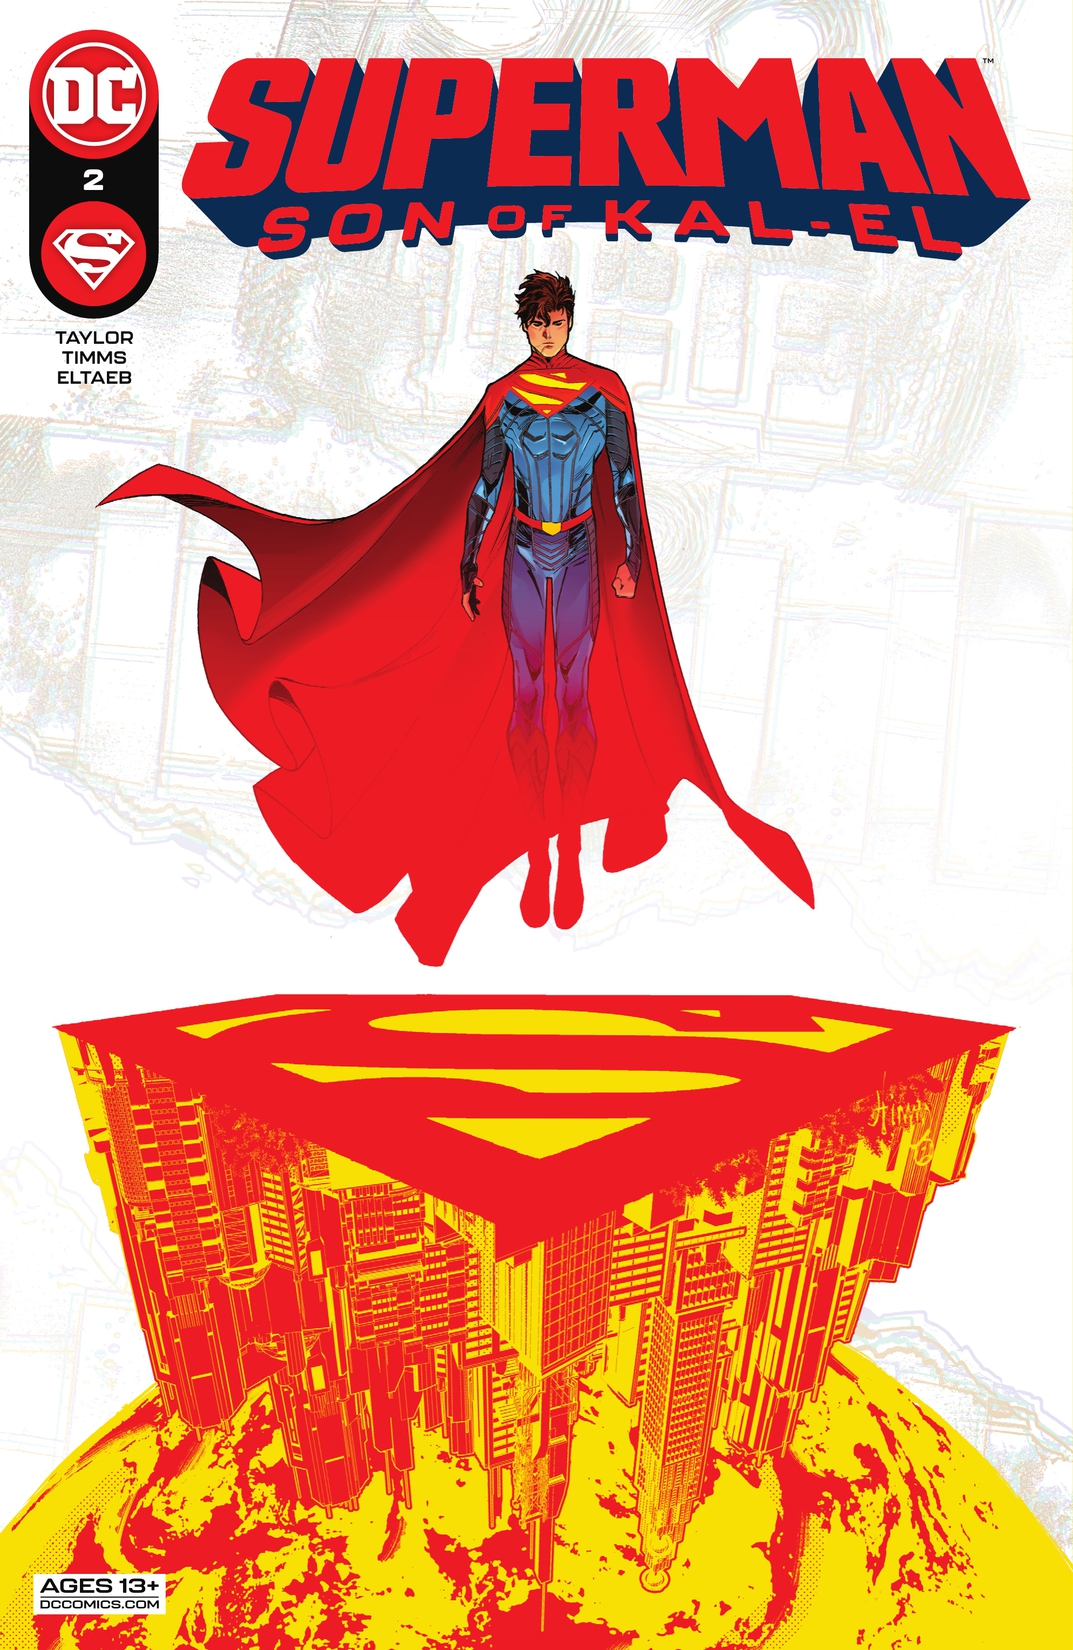 Superman: Son of Kal-El #2 preview images